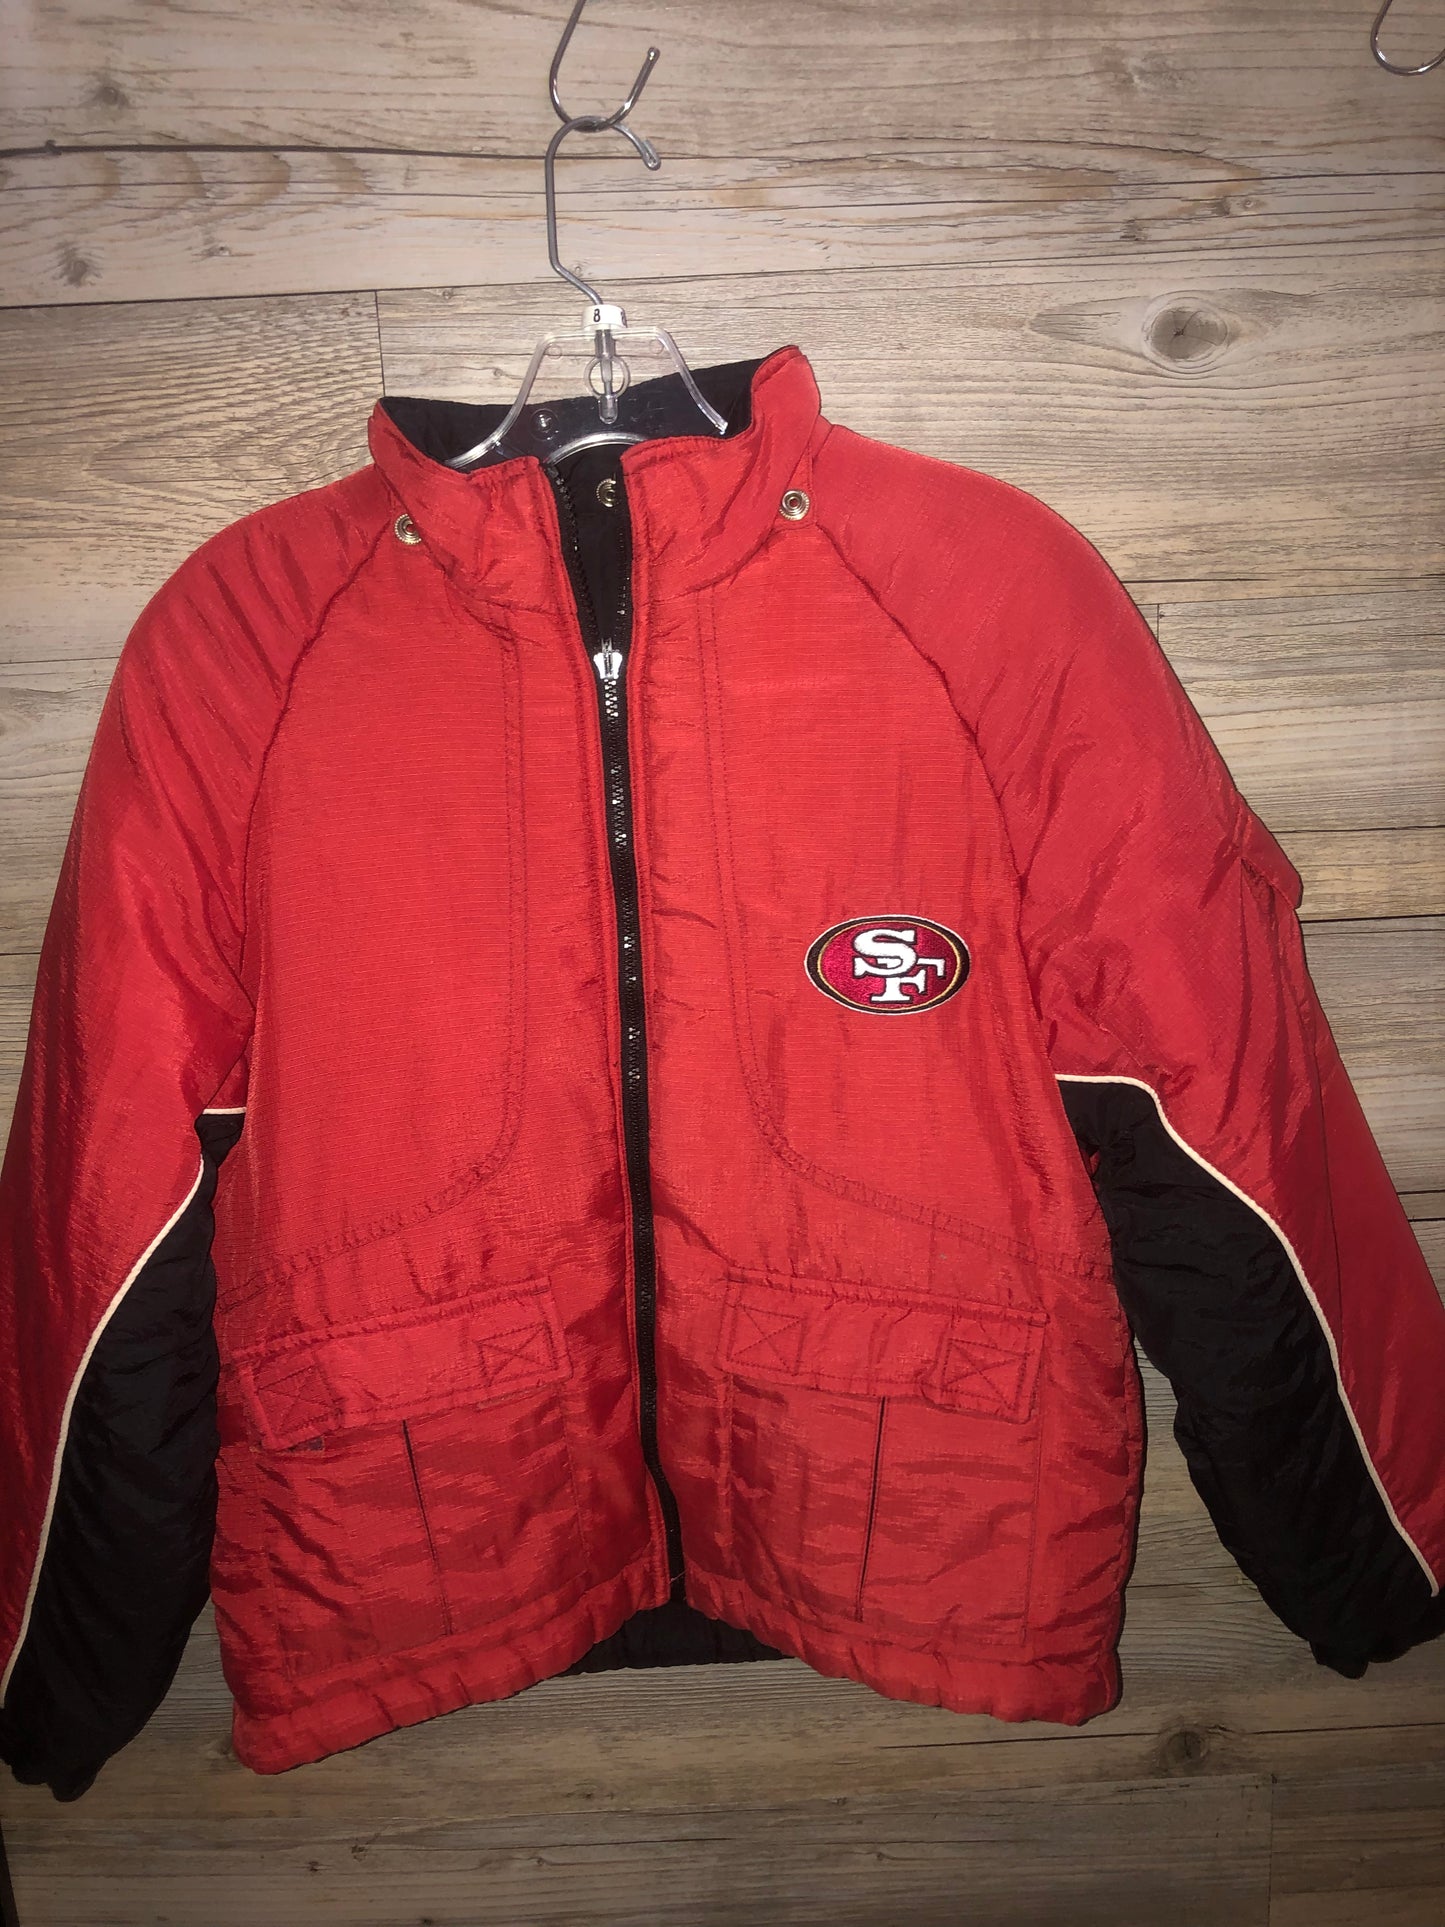 49ers snow jacket